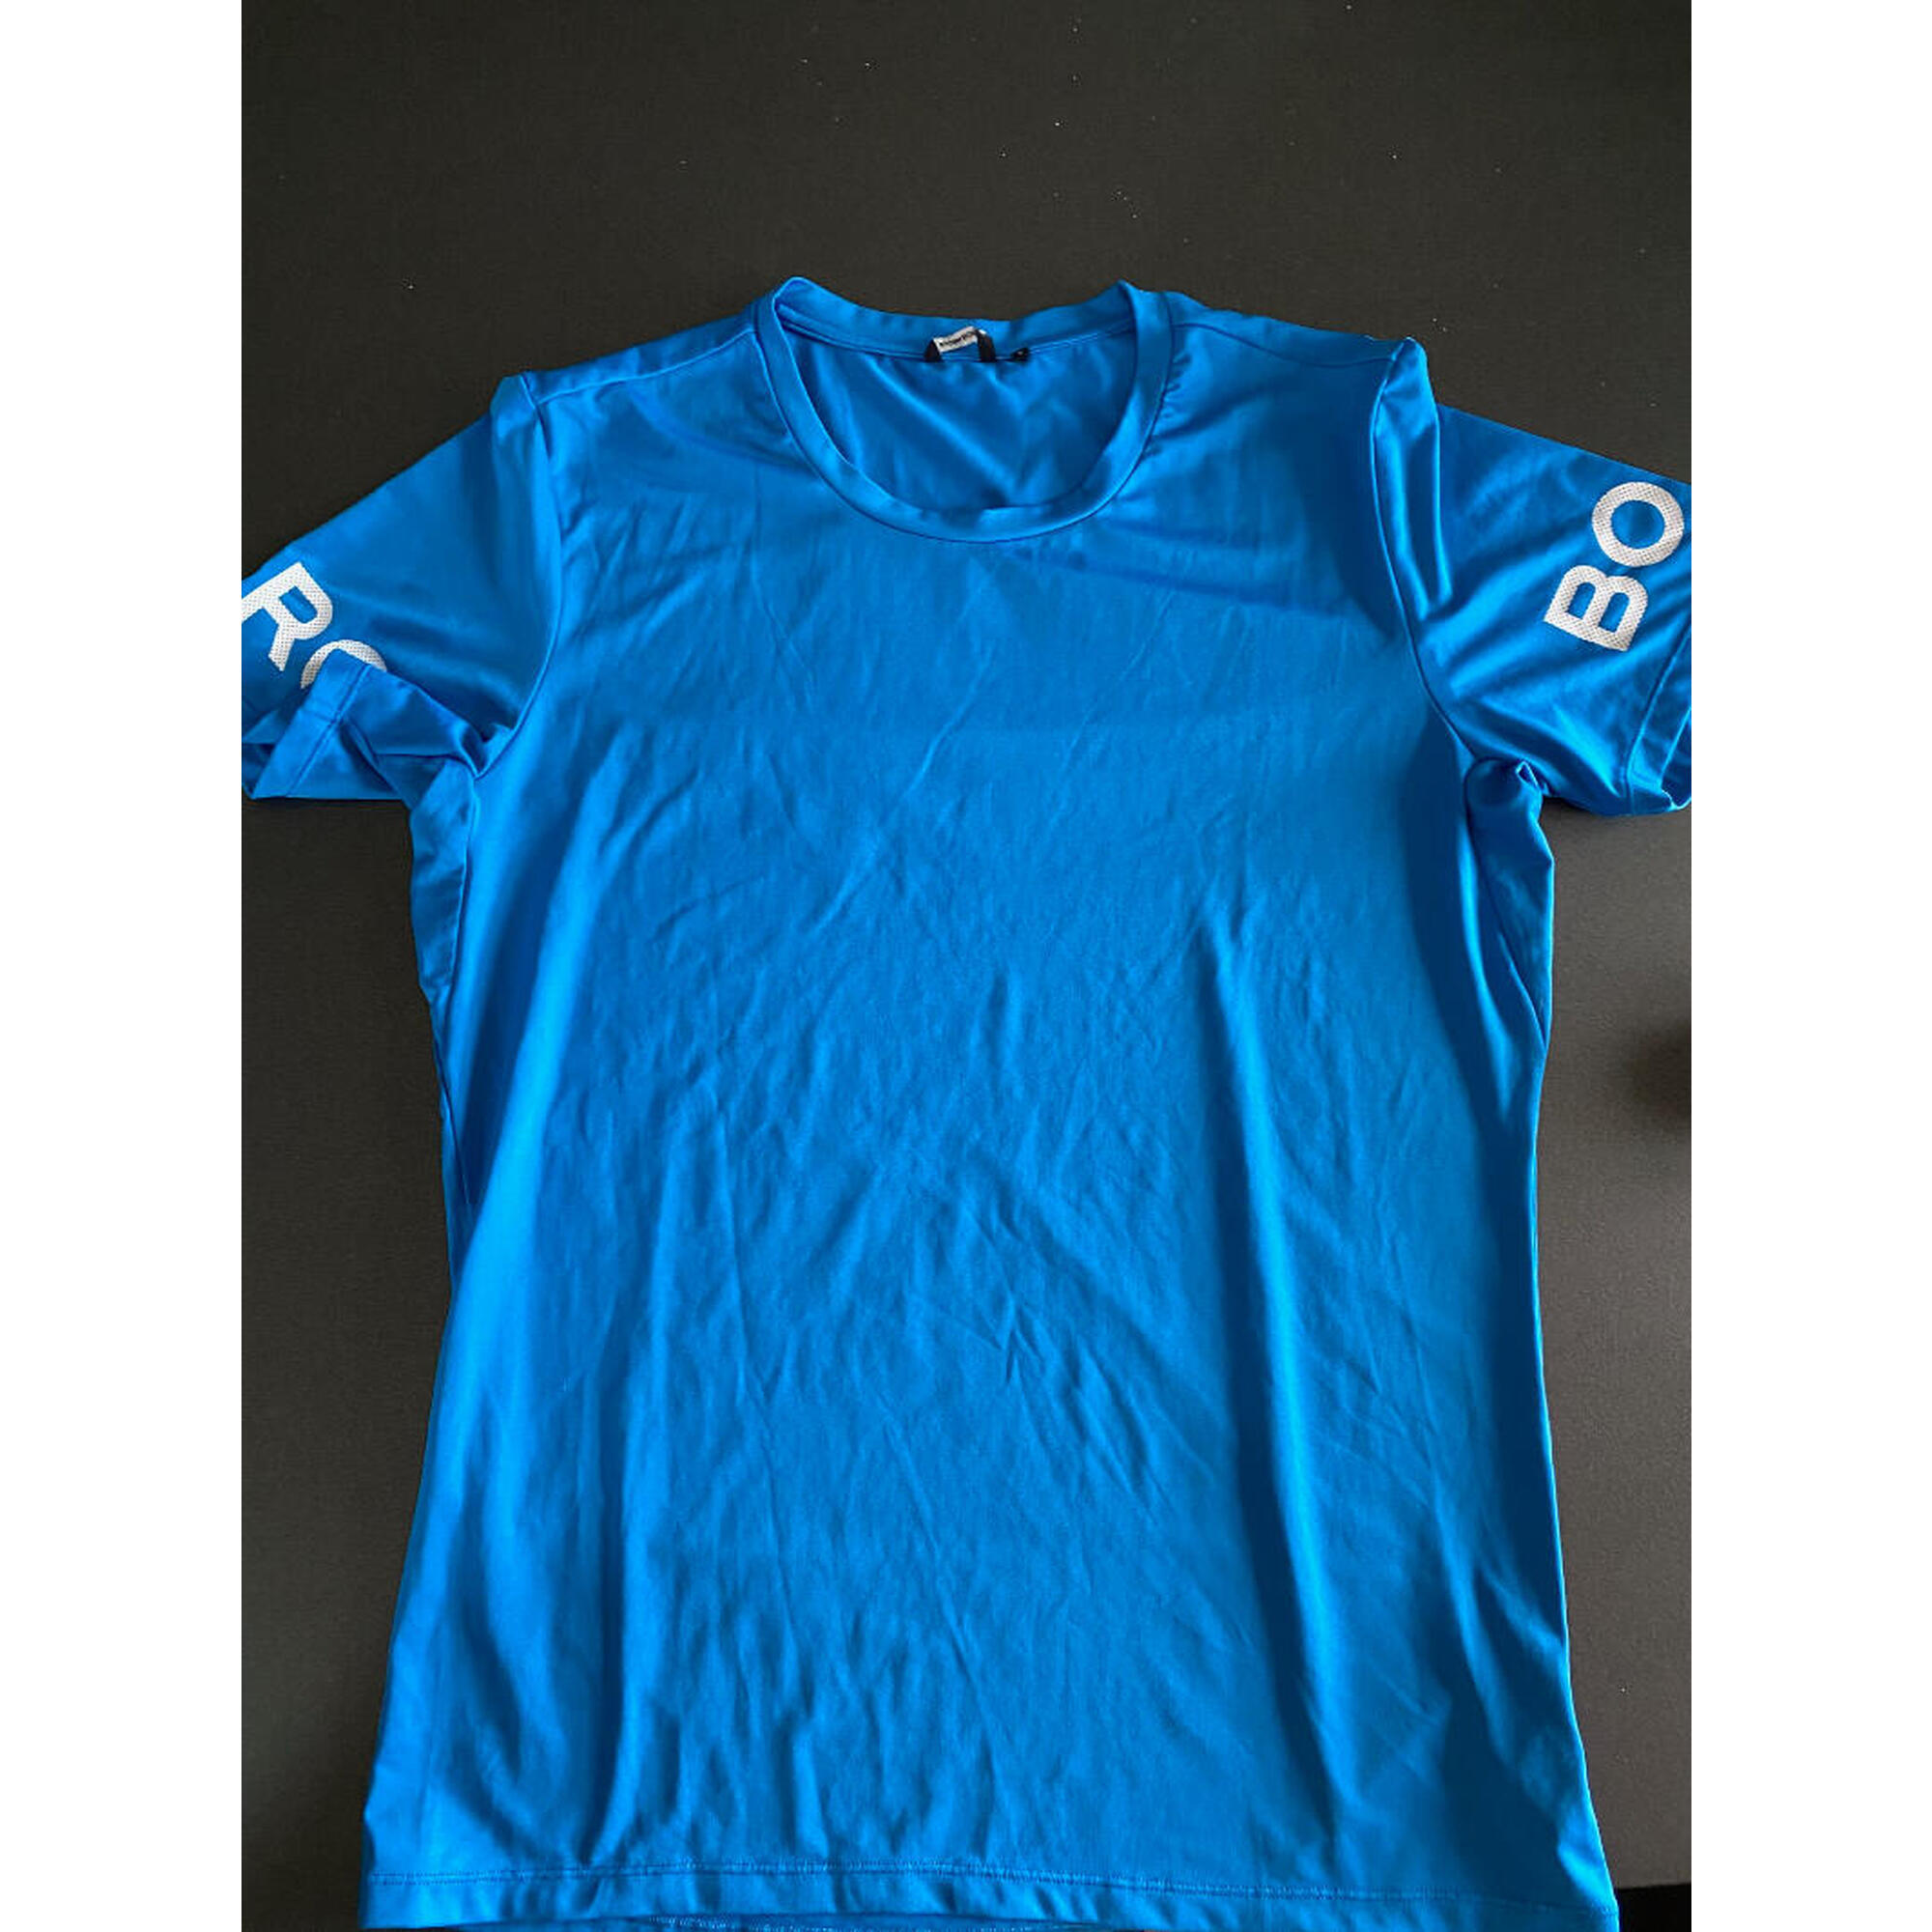 C2C - Bjorn Borg tennis T-shirt